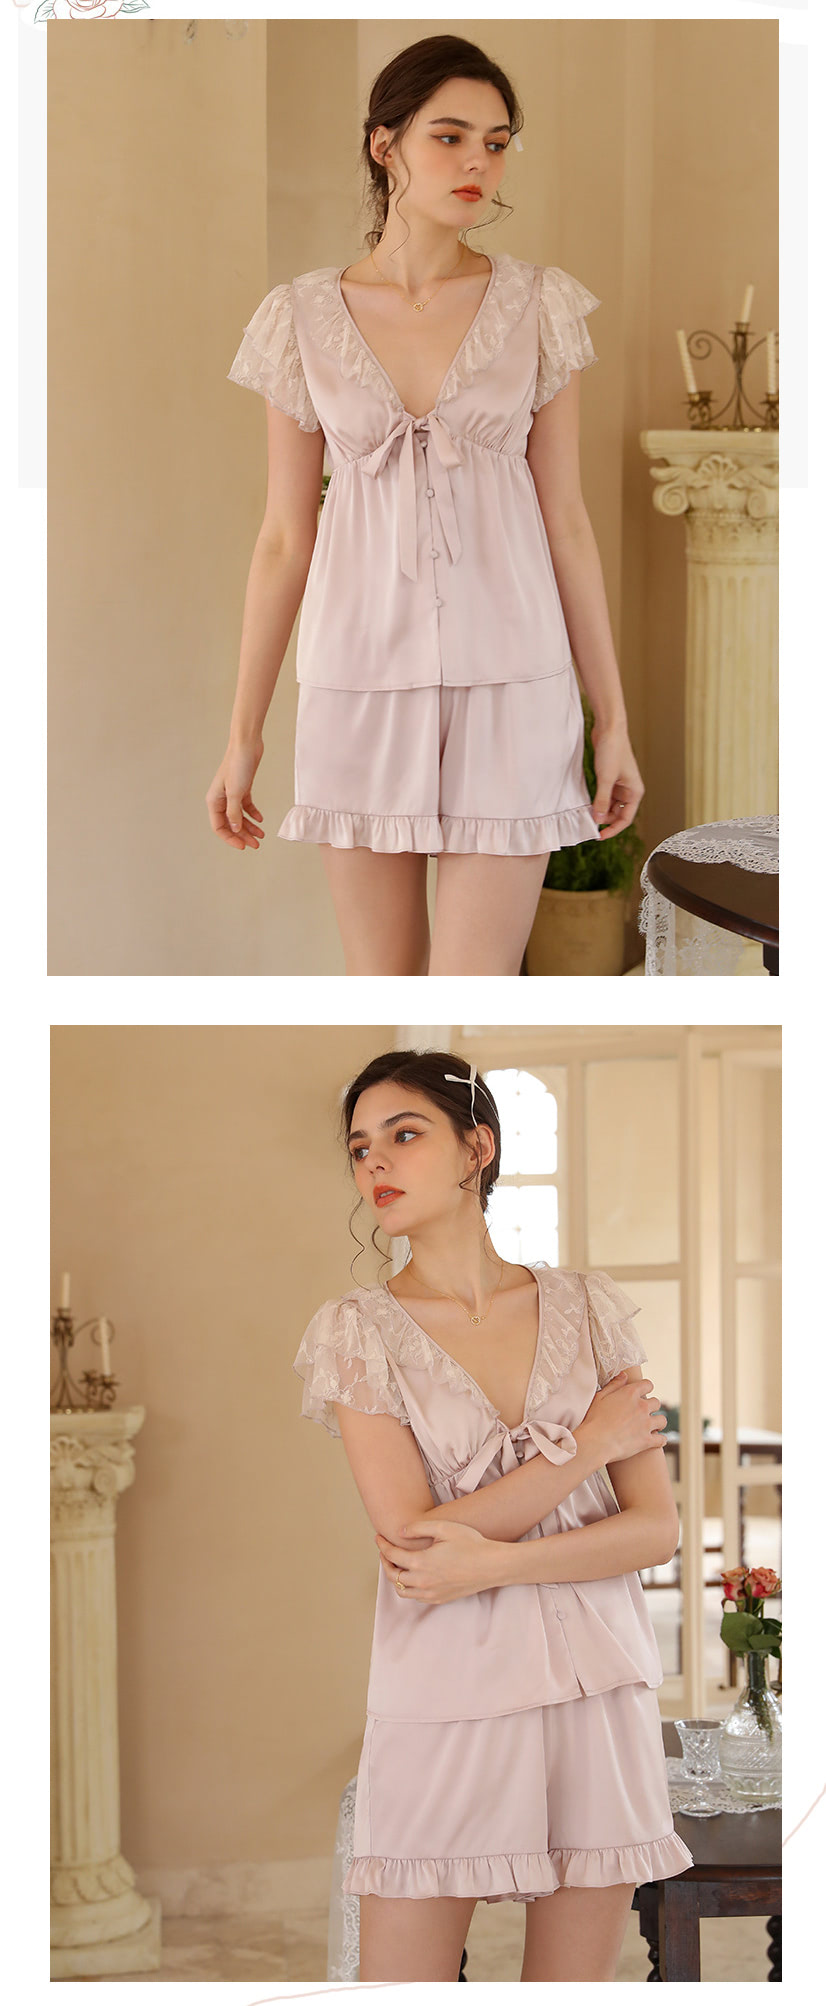 Lace-Satin-Sleepwear-Home-Clothes-Loungewear-Pajama-with-Shorts14.jpg